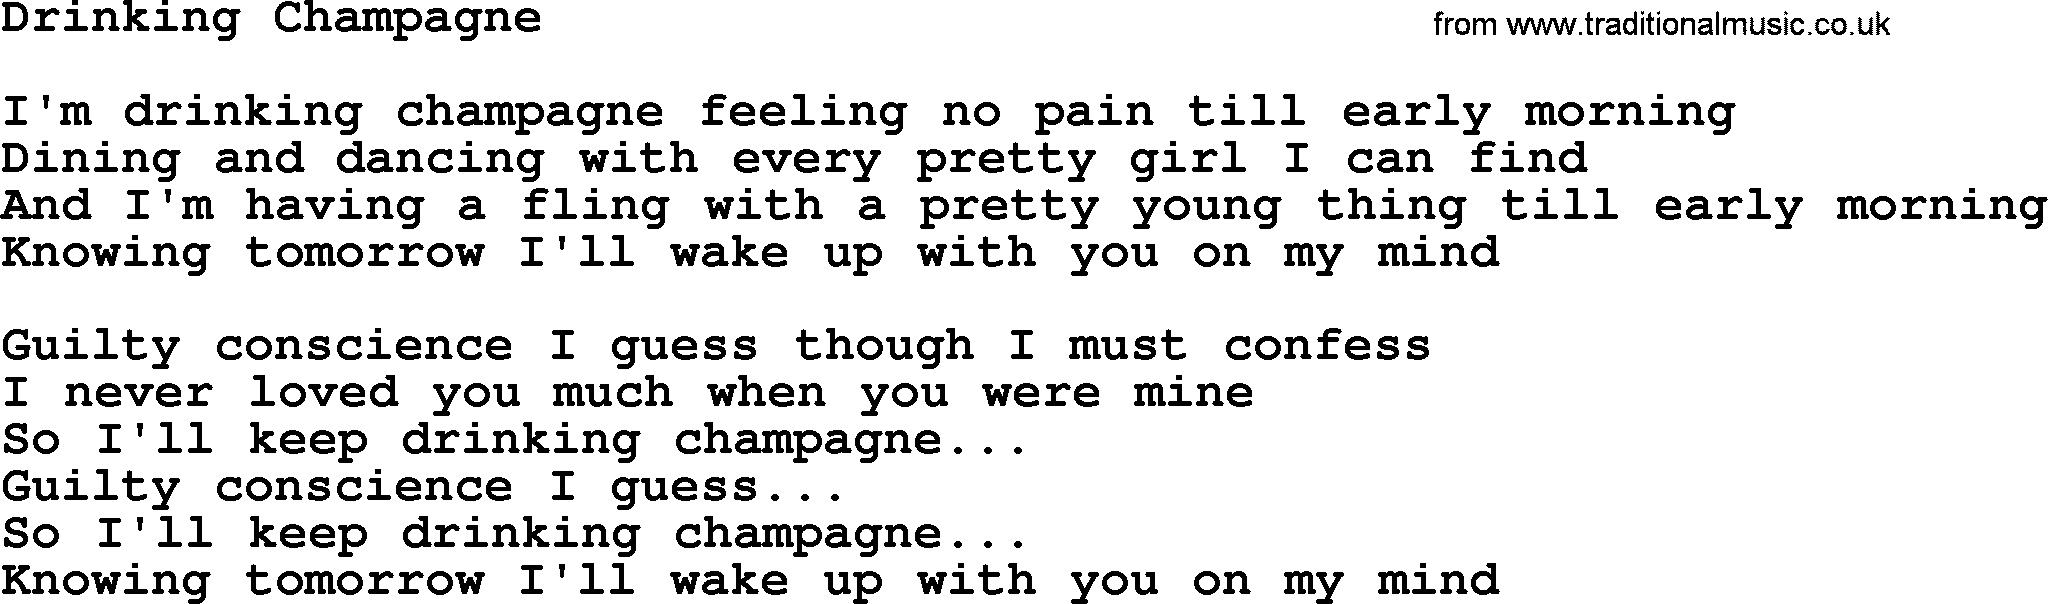 Willie Nelson song: Drinking Champagne lyrics